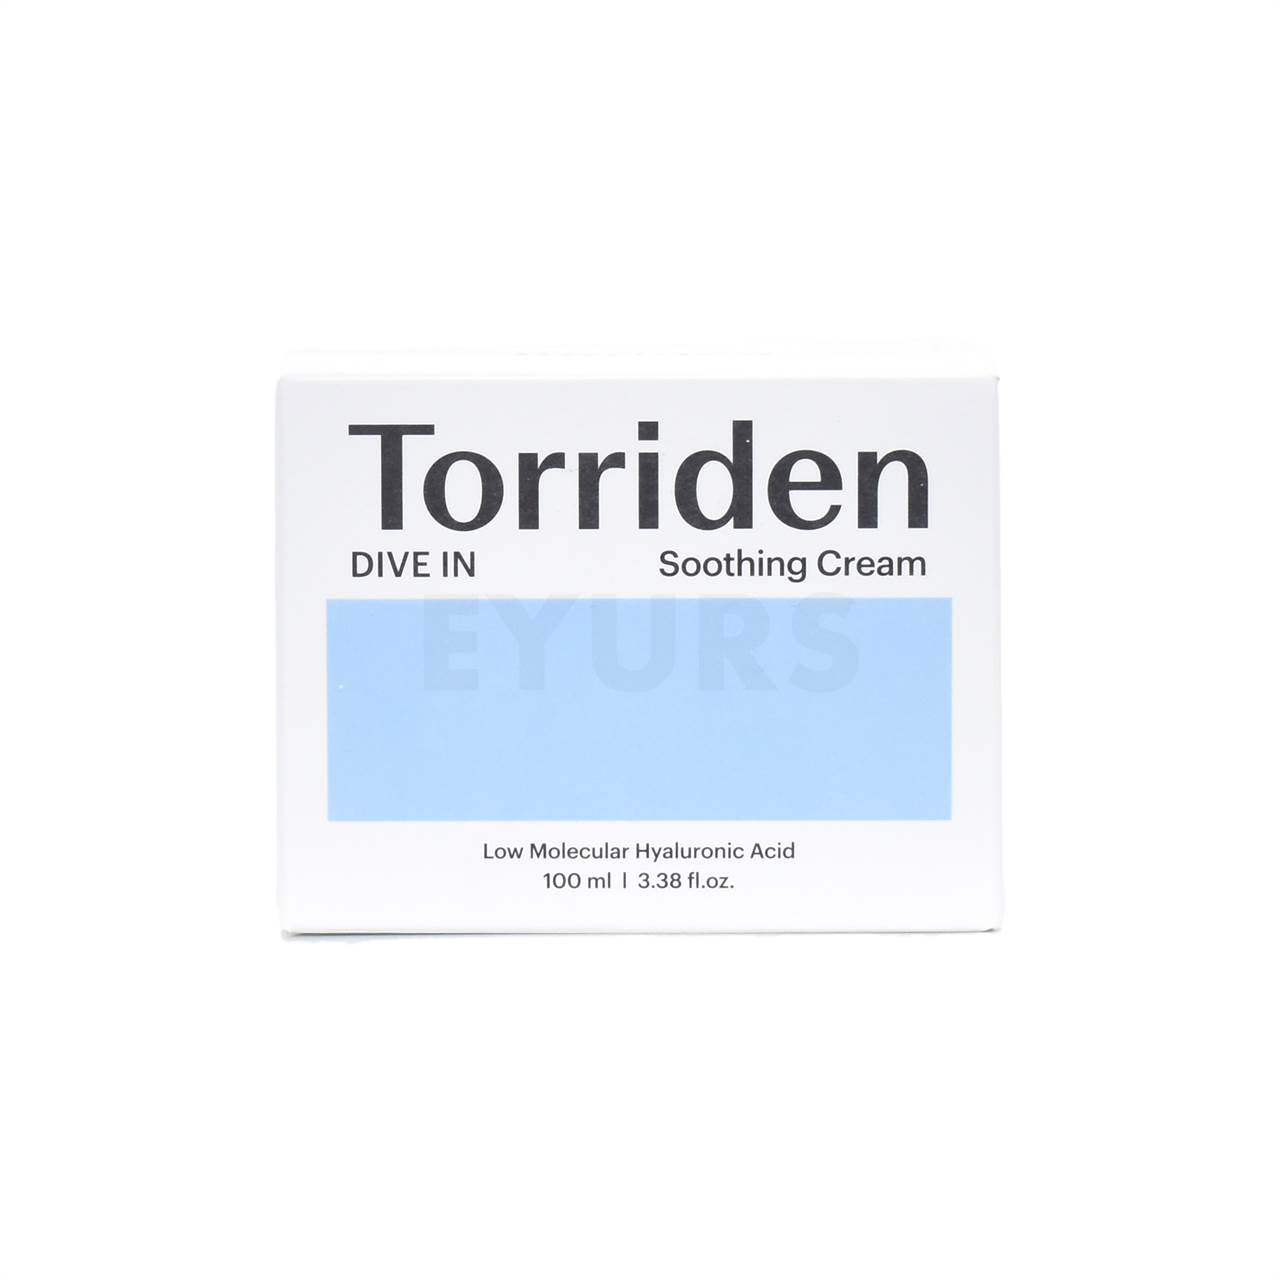 torriden dive in low molecular hyaluronic acid soothing cream front packaging